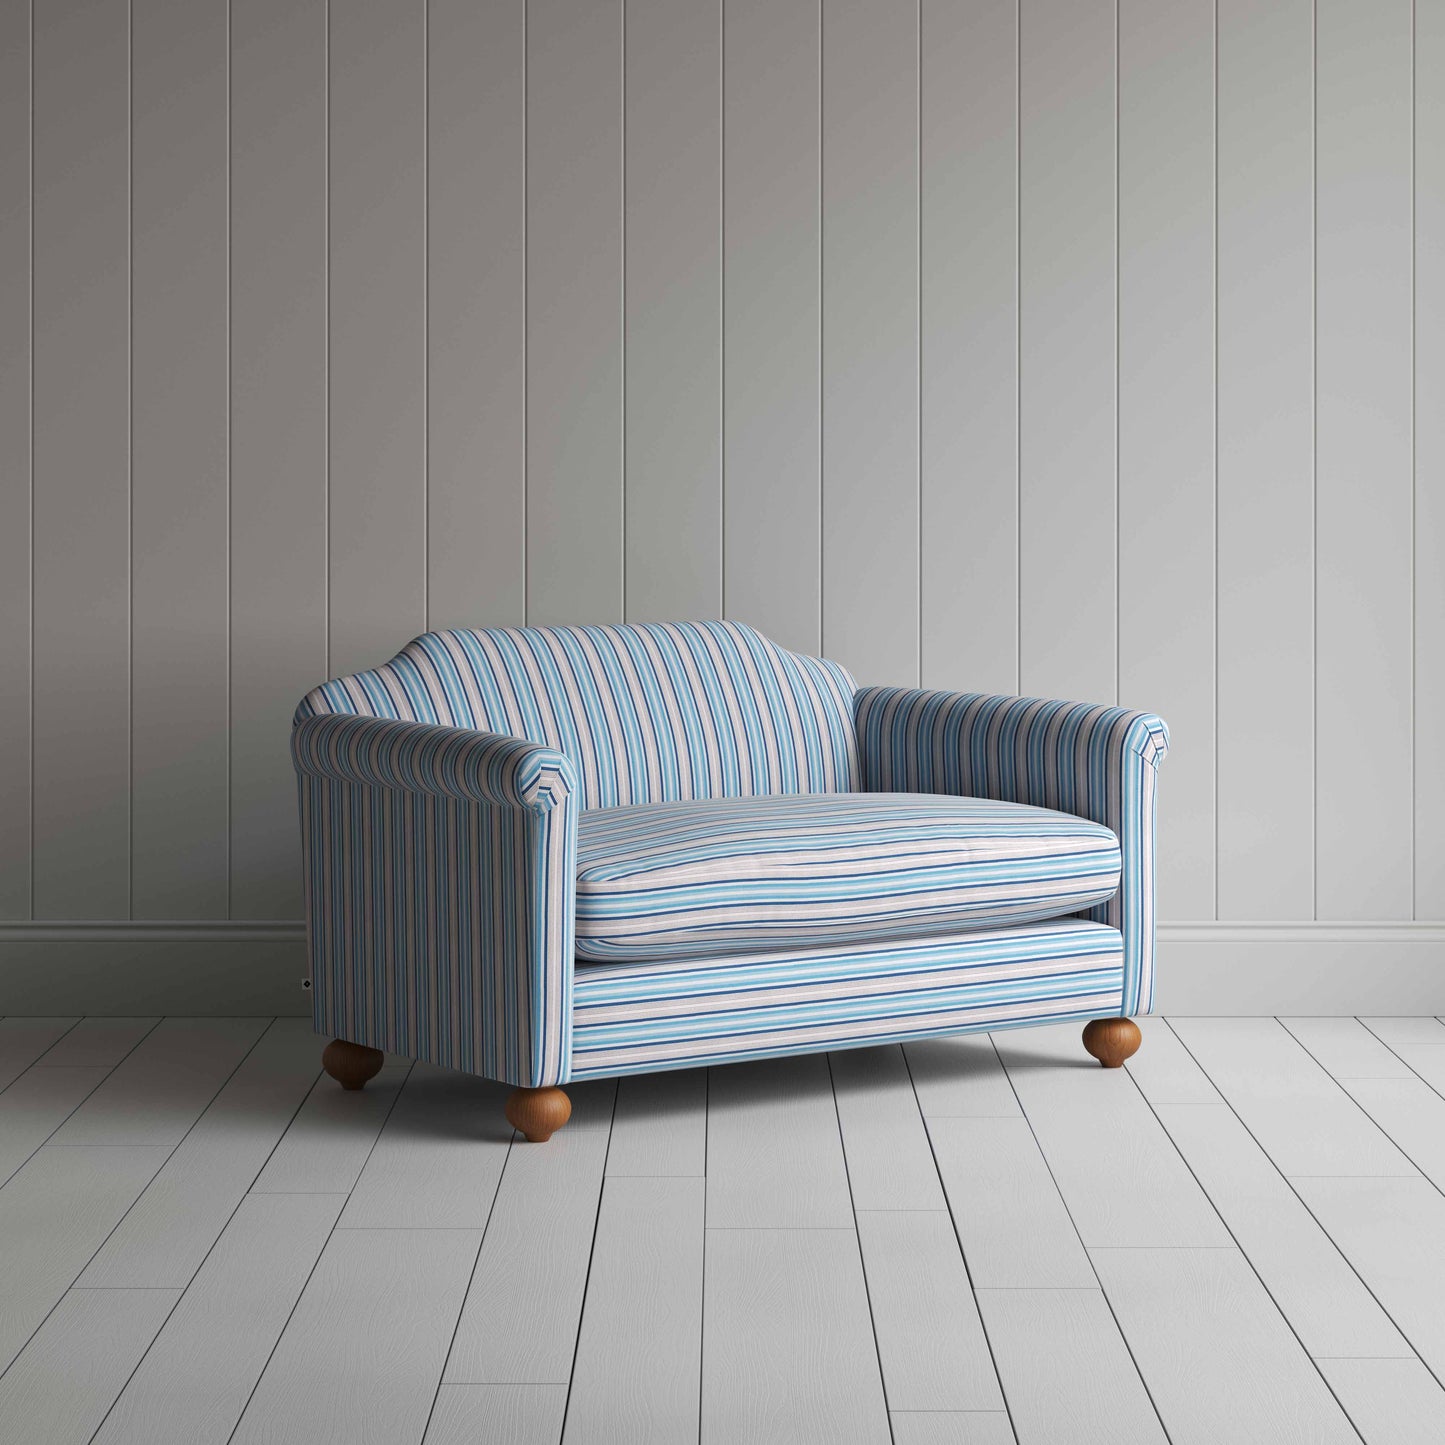 Dolittle 2 Seater Sofa in Slow Lane Cotton Linen, Blue